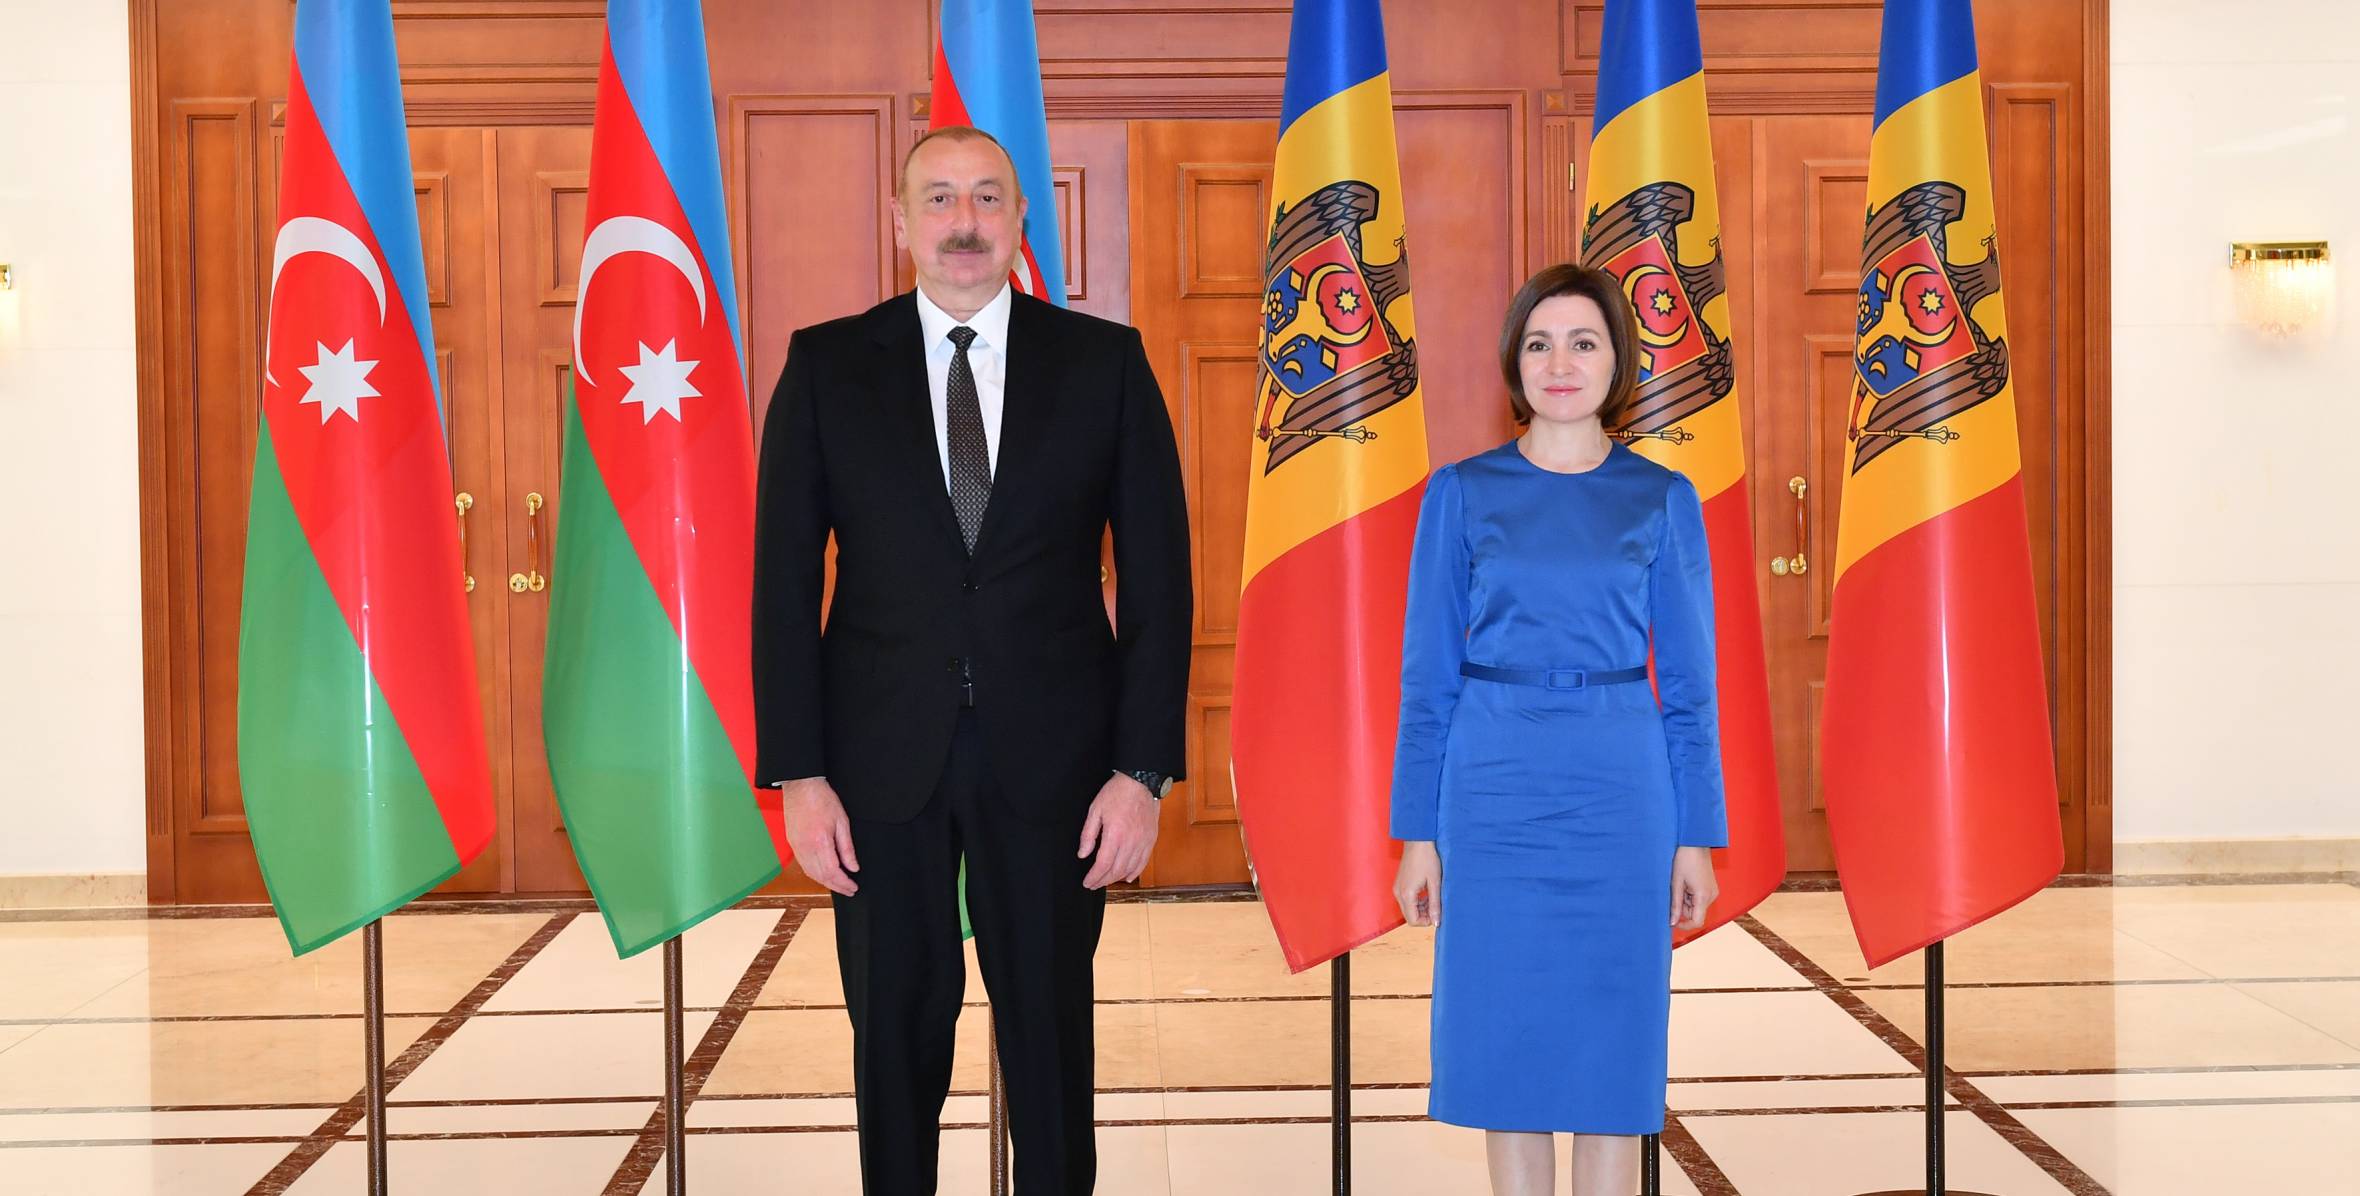 Ilham Aliyev met with President of Moldova Maia Sandu in Chișinău